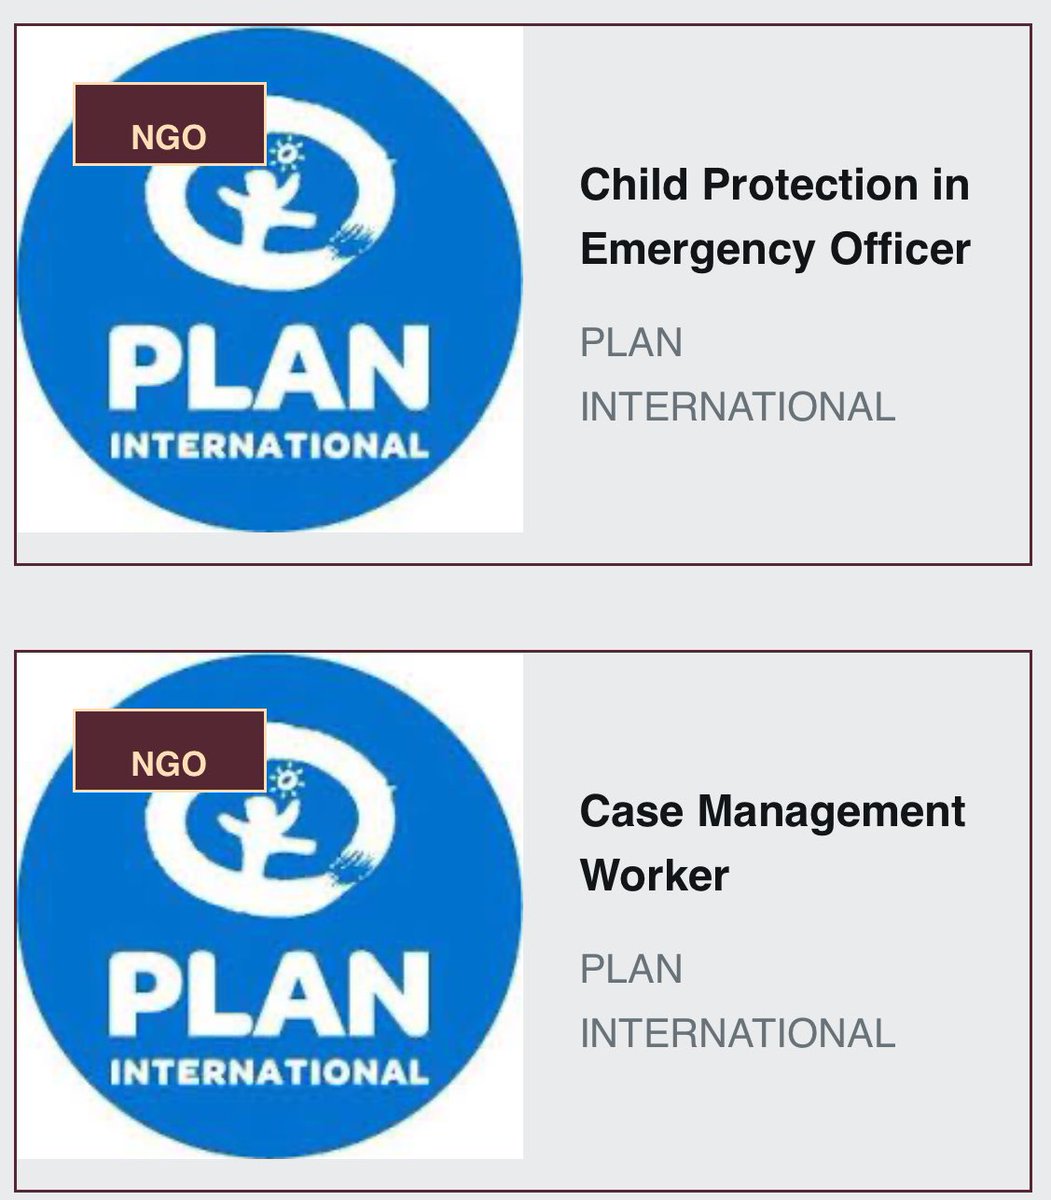 Plan International is hiring in Uganda. - Case Management Worker: jobnotices.ug/job/case-manag… - Child Protection in emergency Officer: jobnotices.ug/job/child-prot…